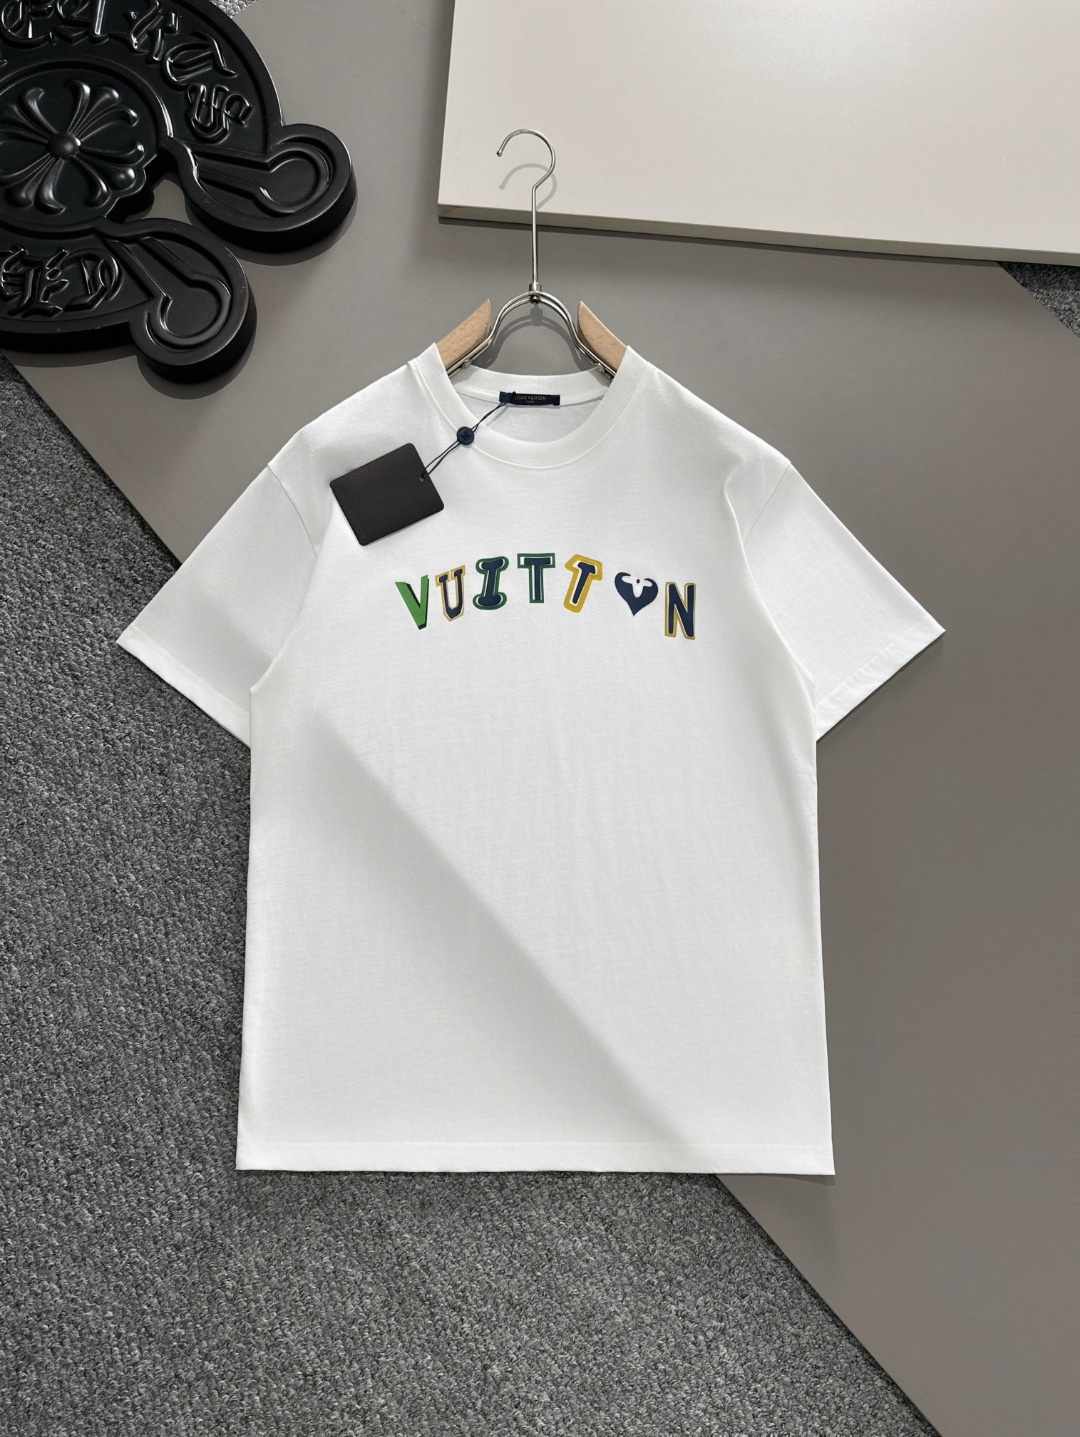 Louis Vuitton Goedkoop
 Kleding T-Shirt Zwart Wit Katoen Lente/Zomercollectie Fashion Korte mouw